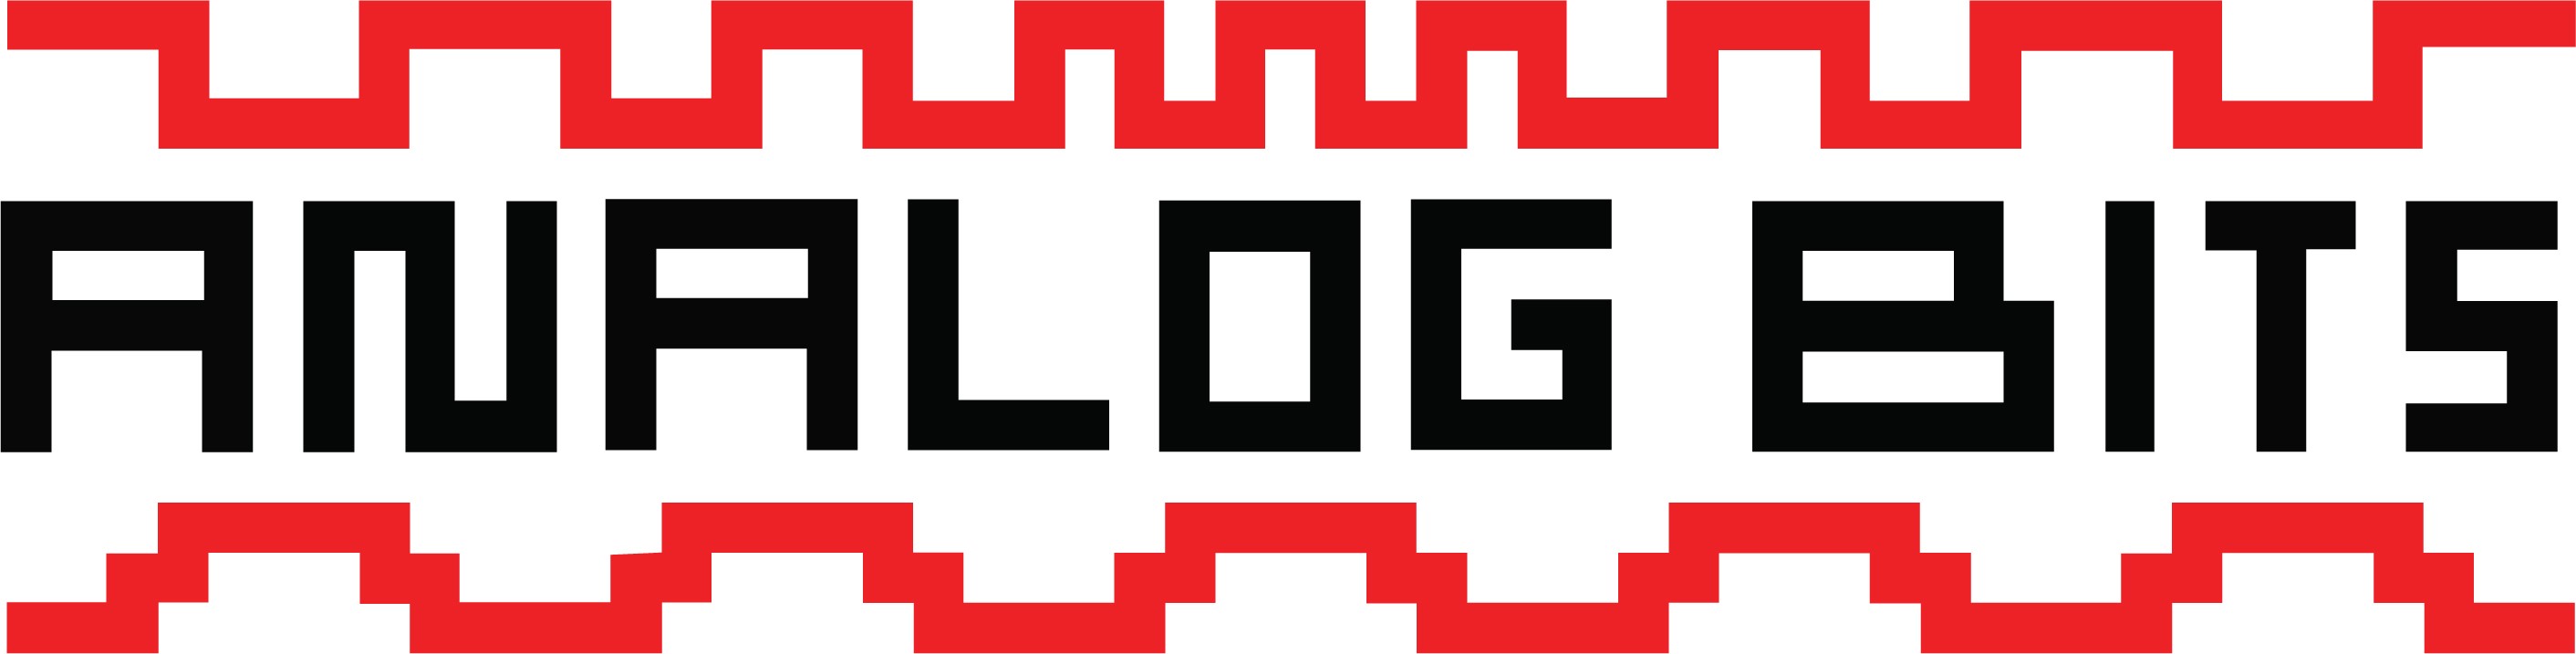 Analog Bits logo